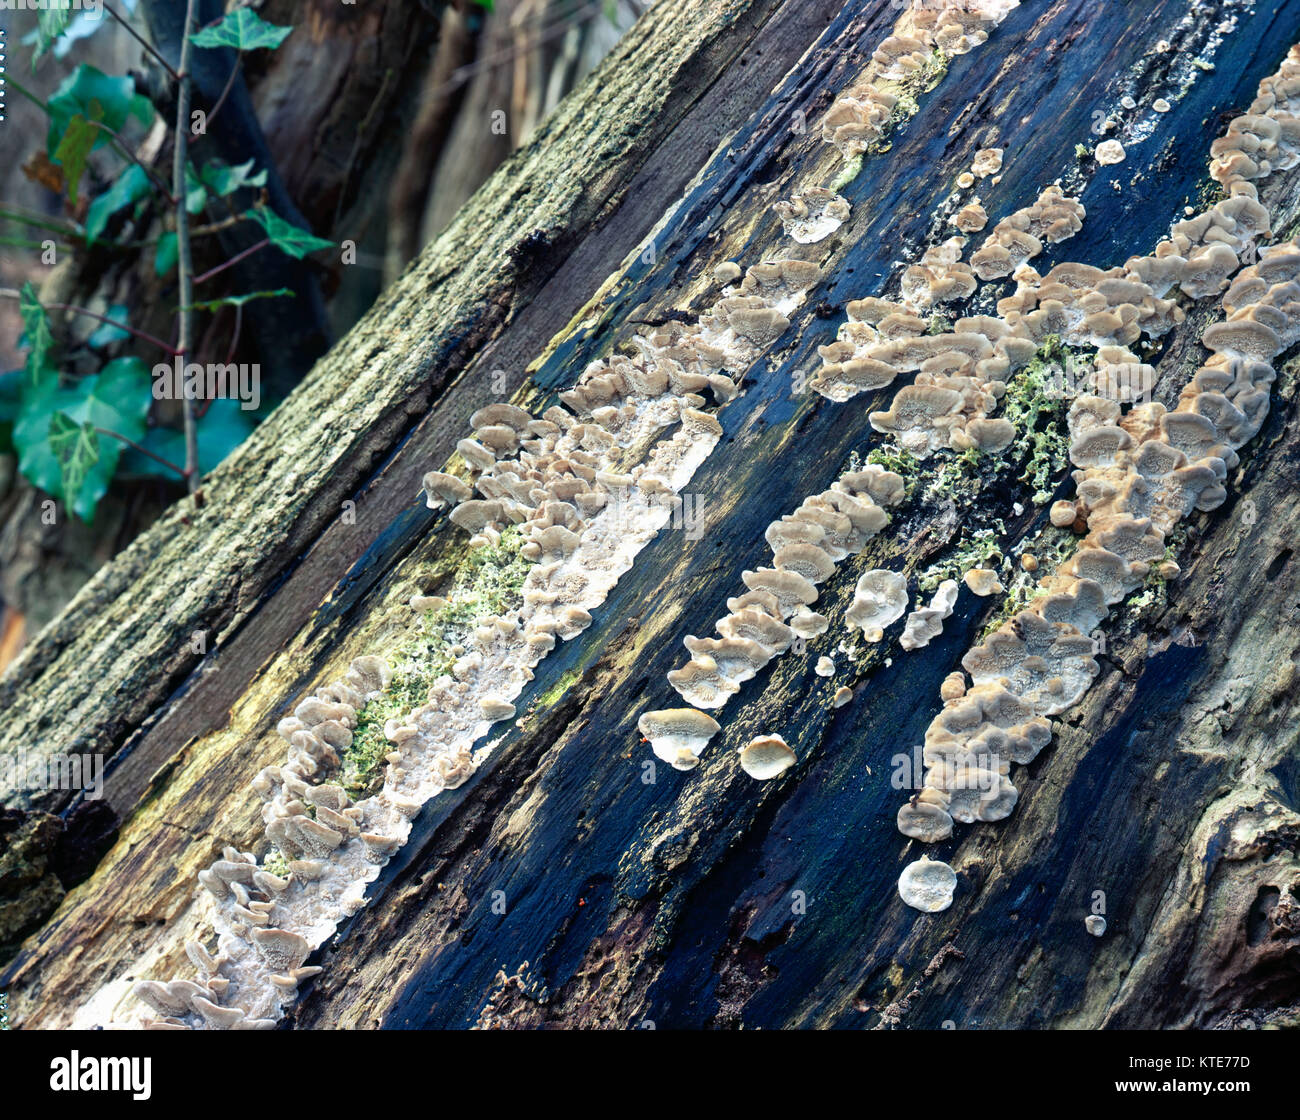 Abstract fungus on rotting log Stock Photo